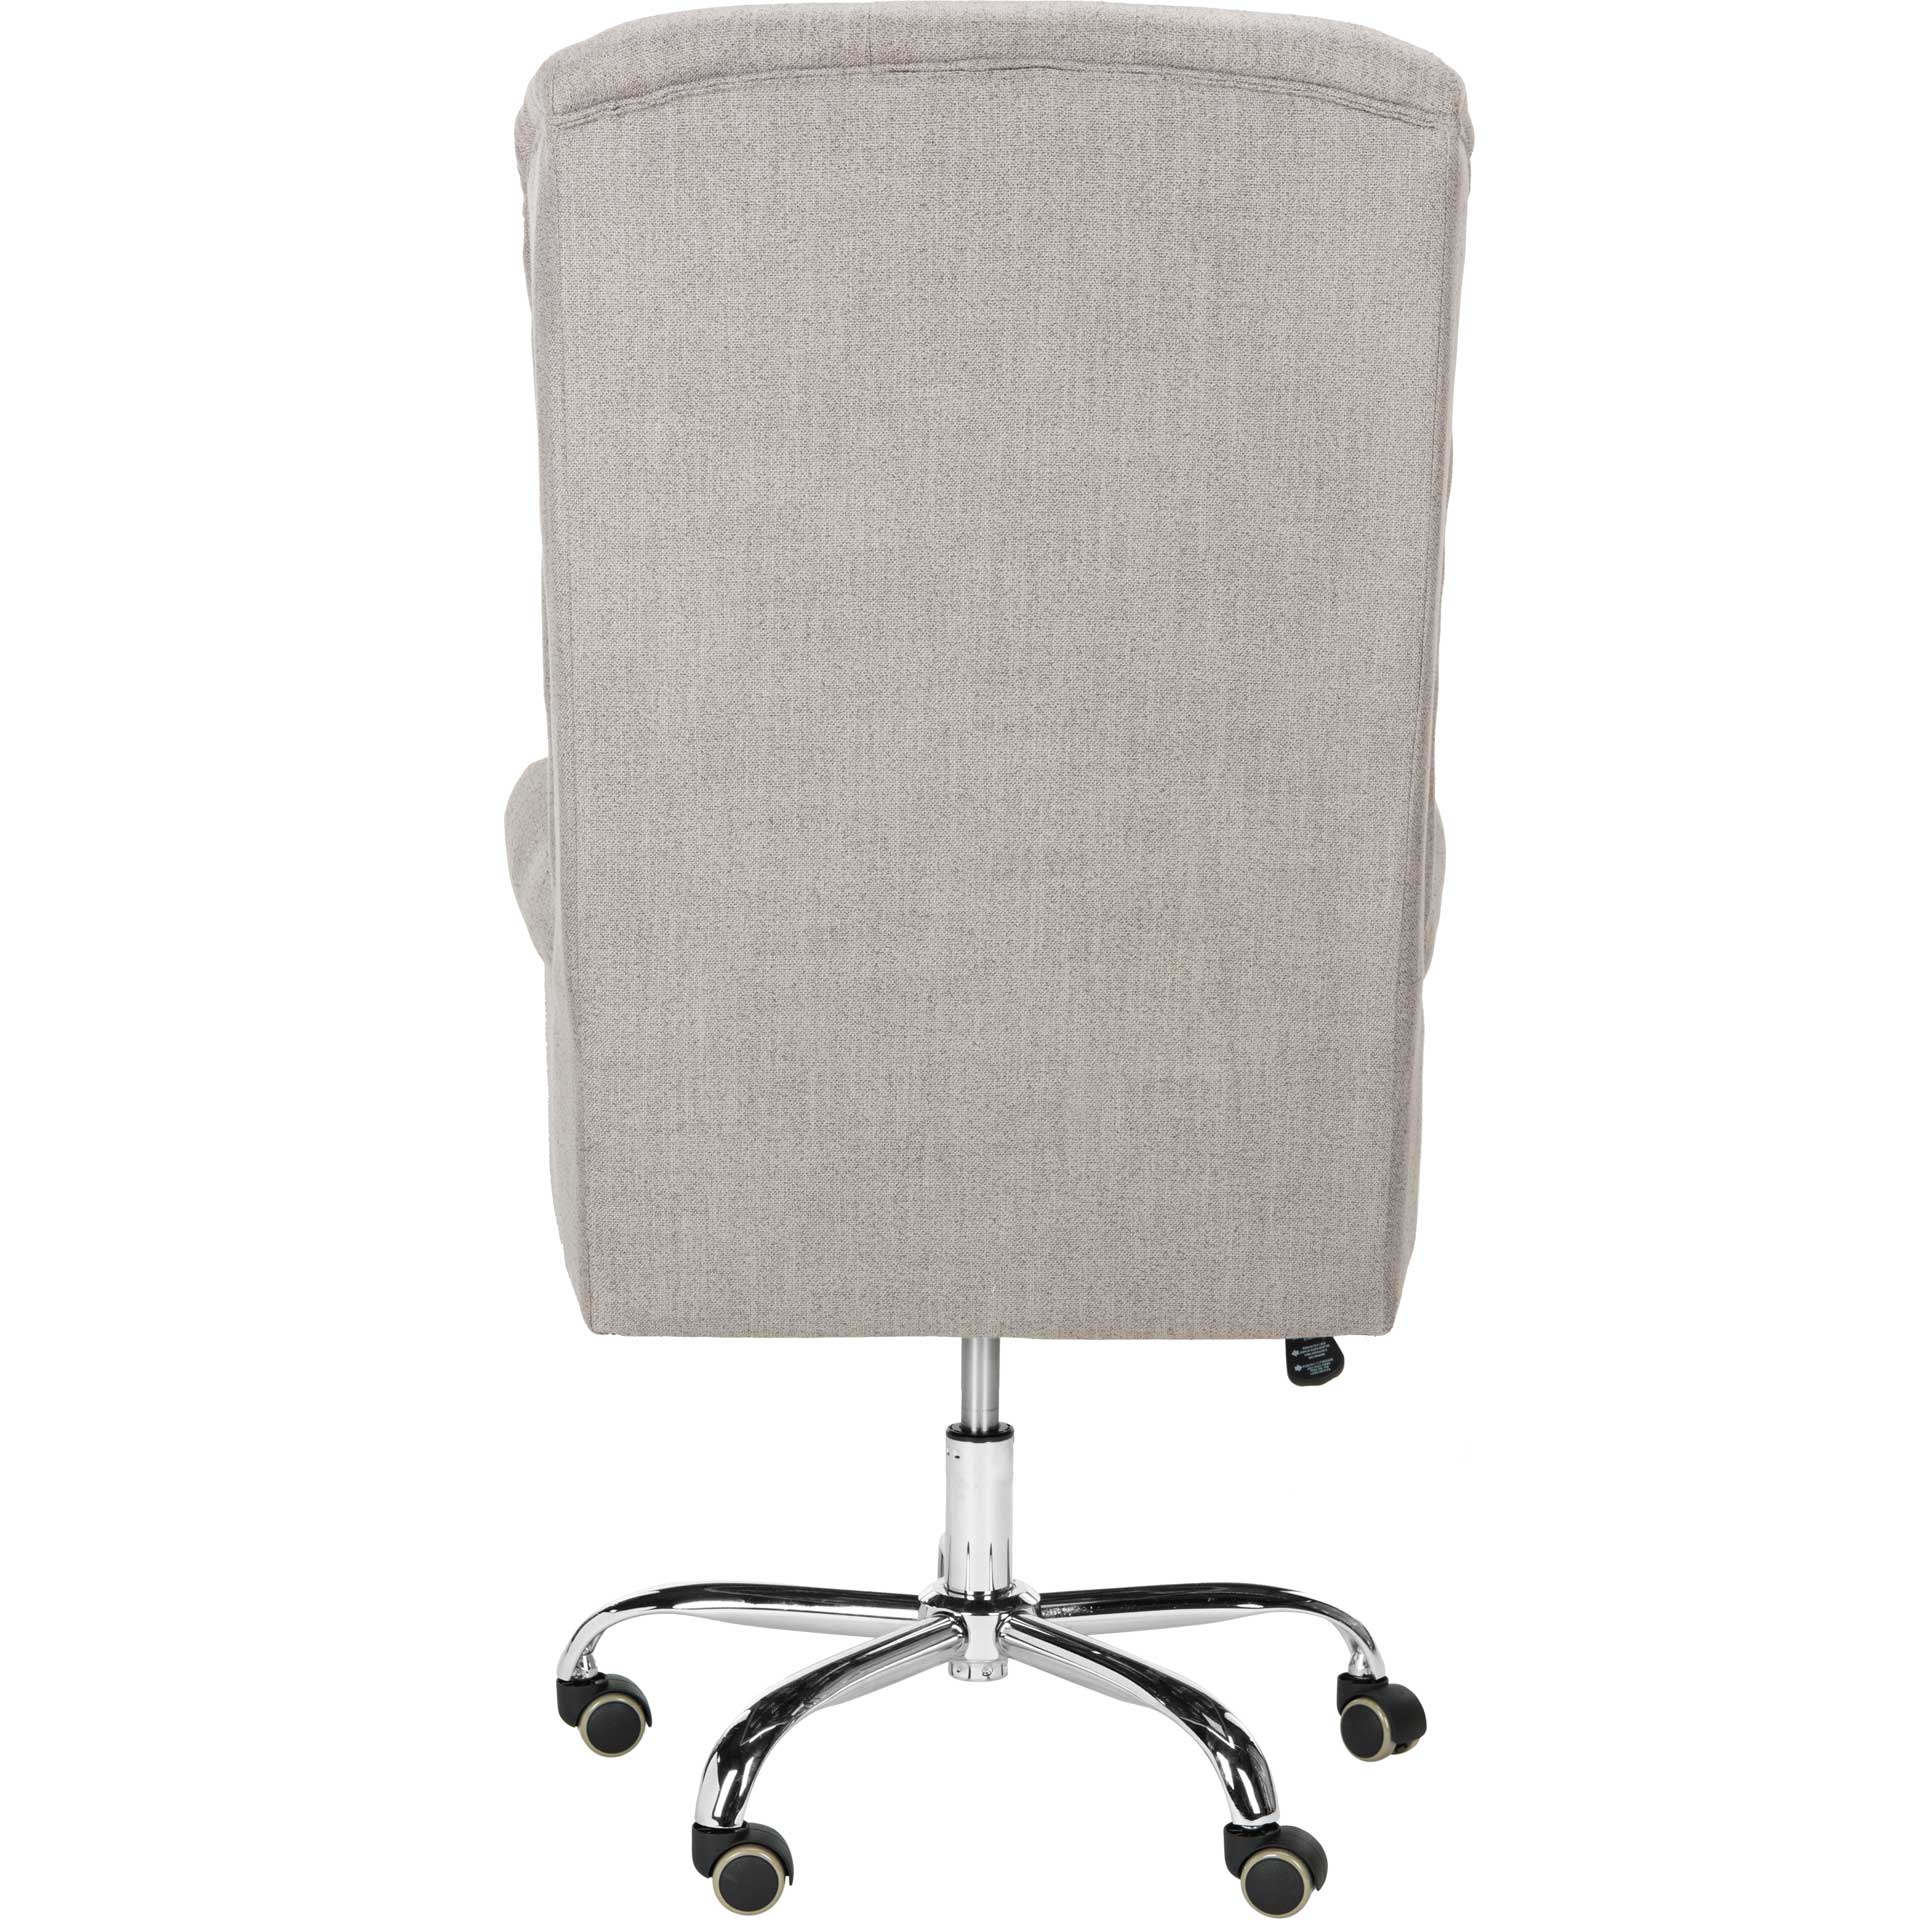 Iago Linen Chrome Leg Swivel Office Chair Gray/Chrome